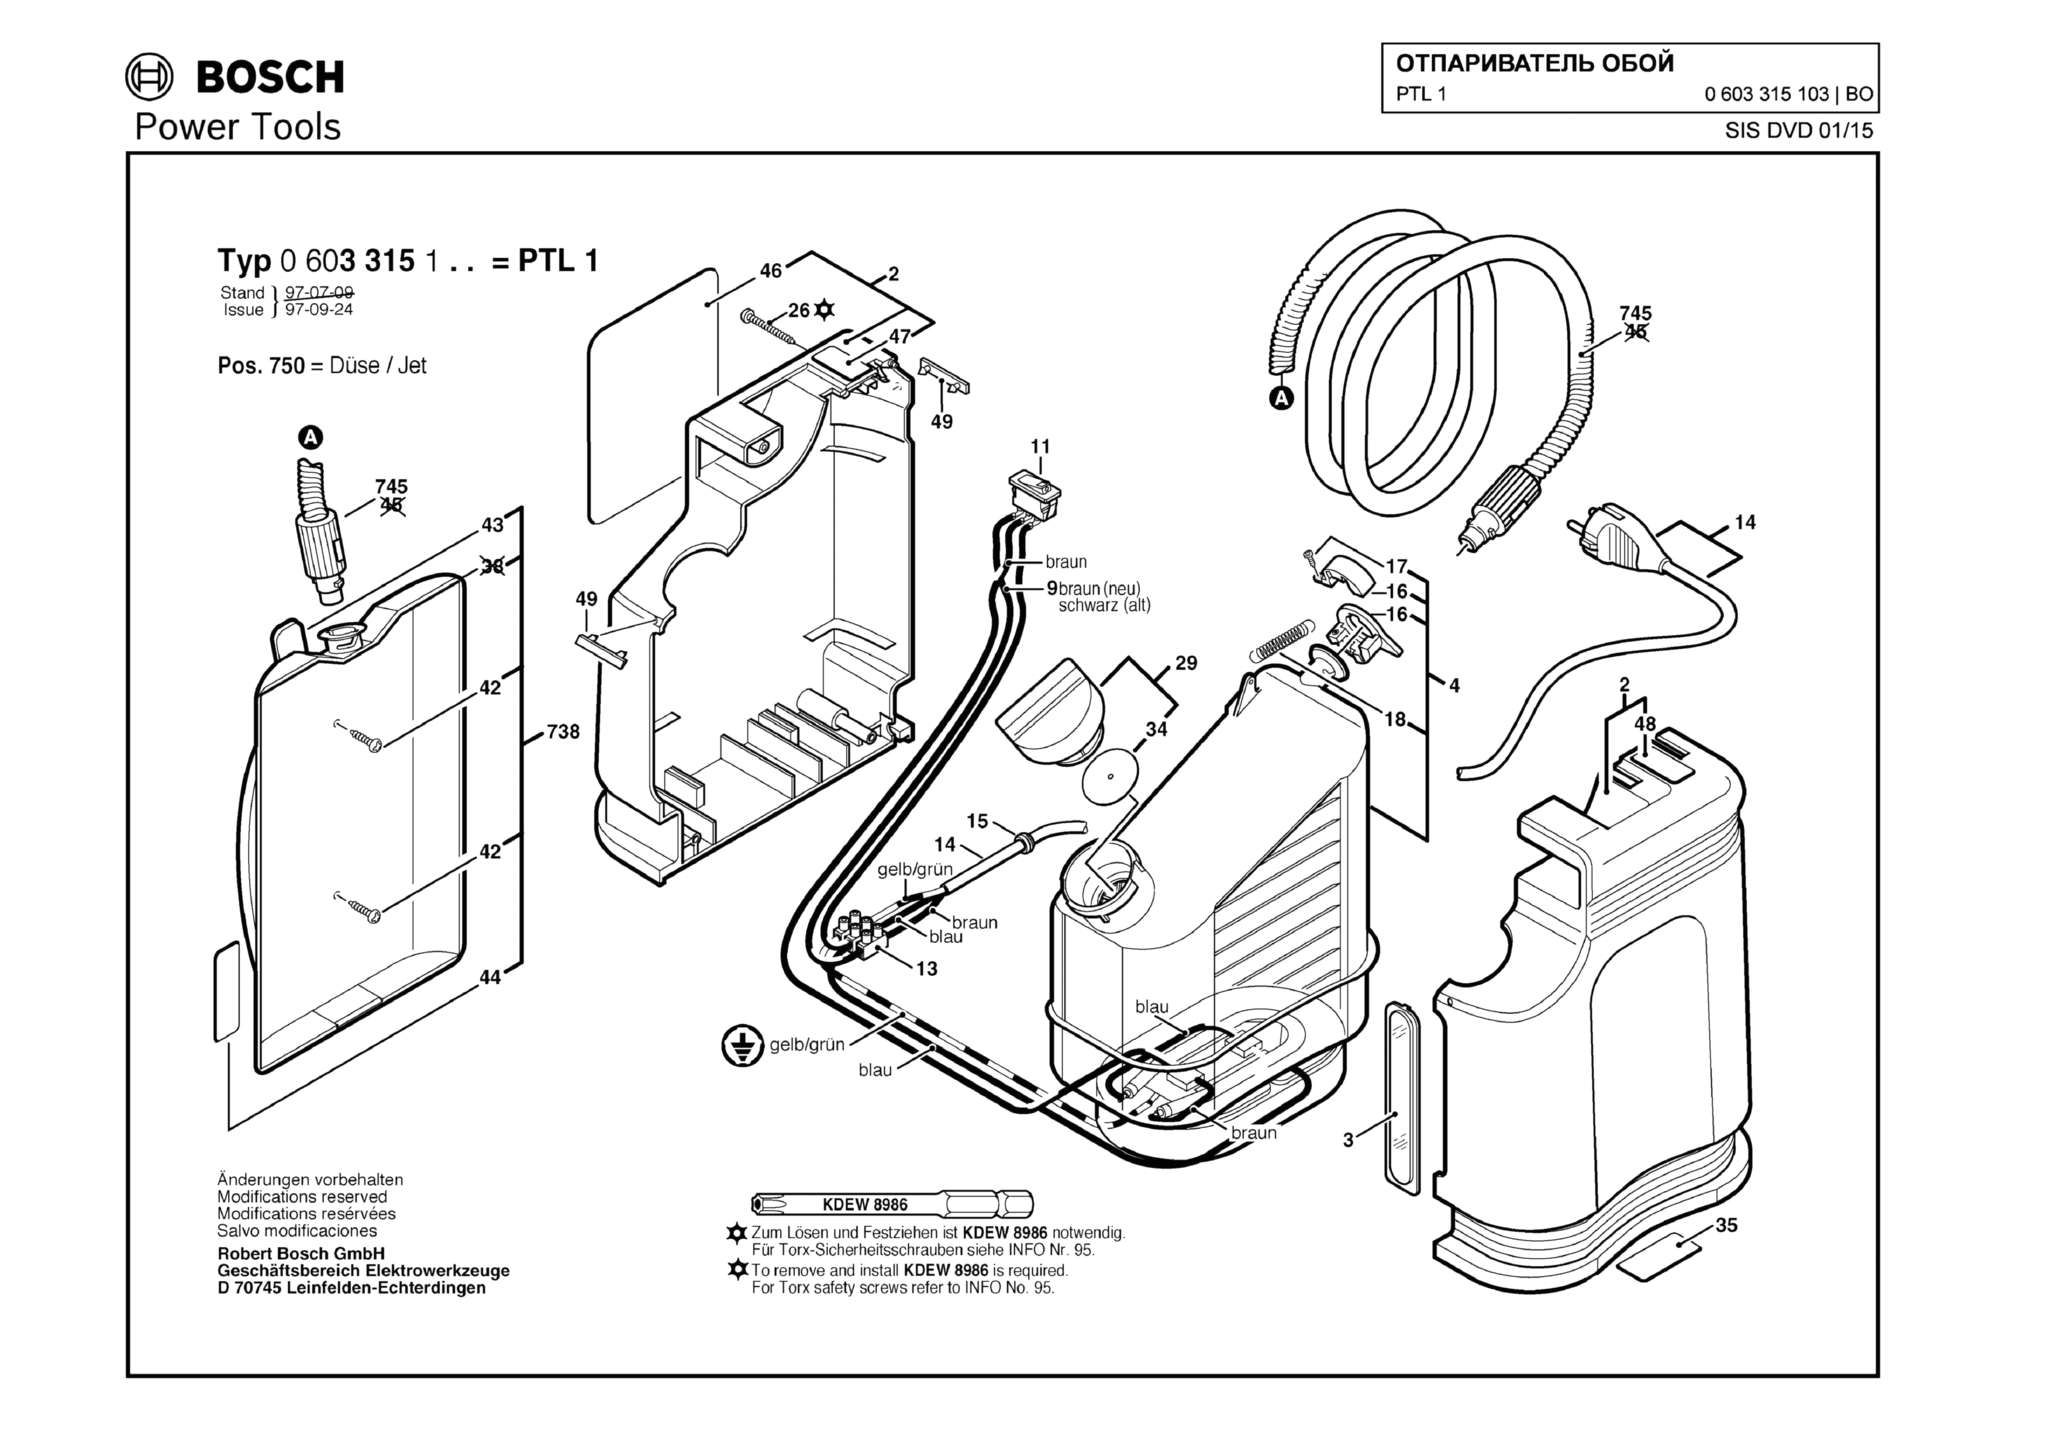 Запчасти, схема и деталировка Bosch PTL 1 (ТИП 0603315103)